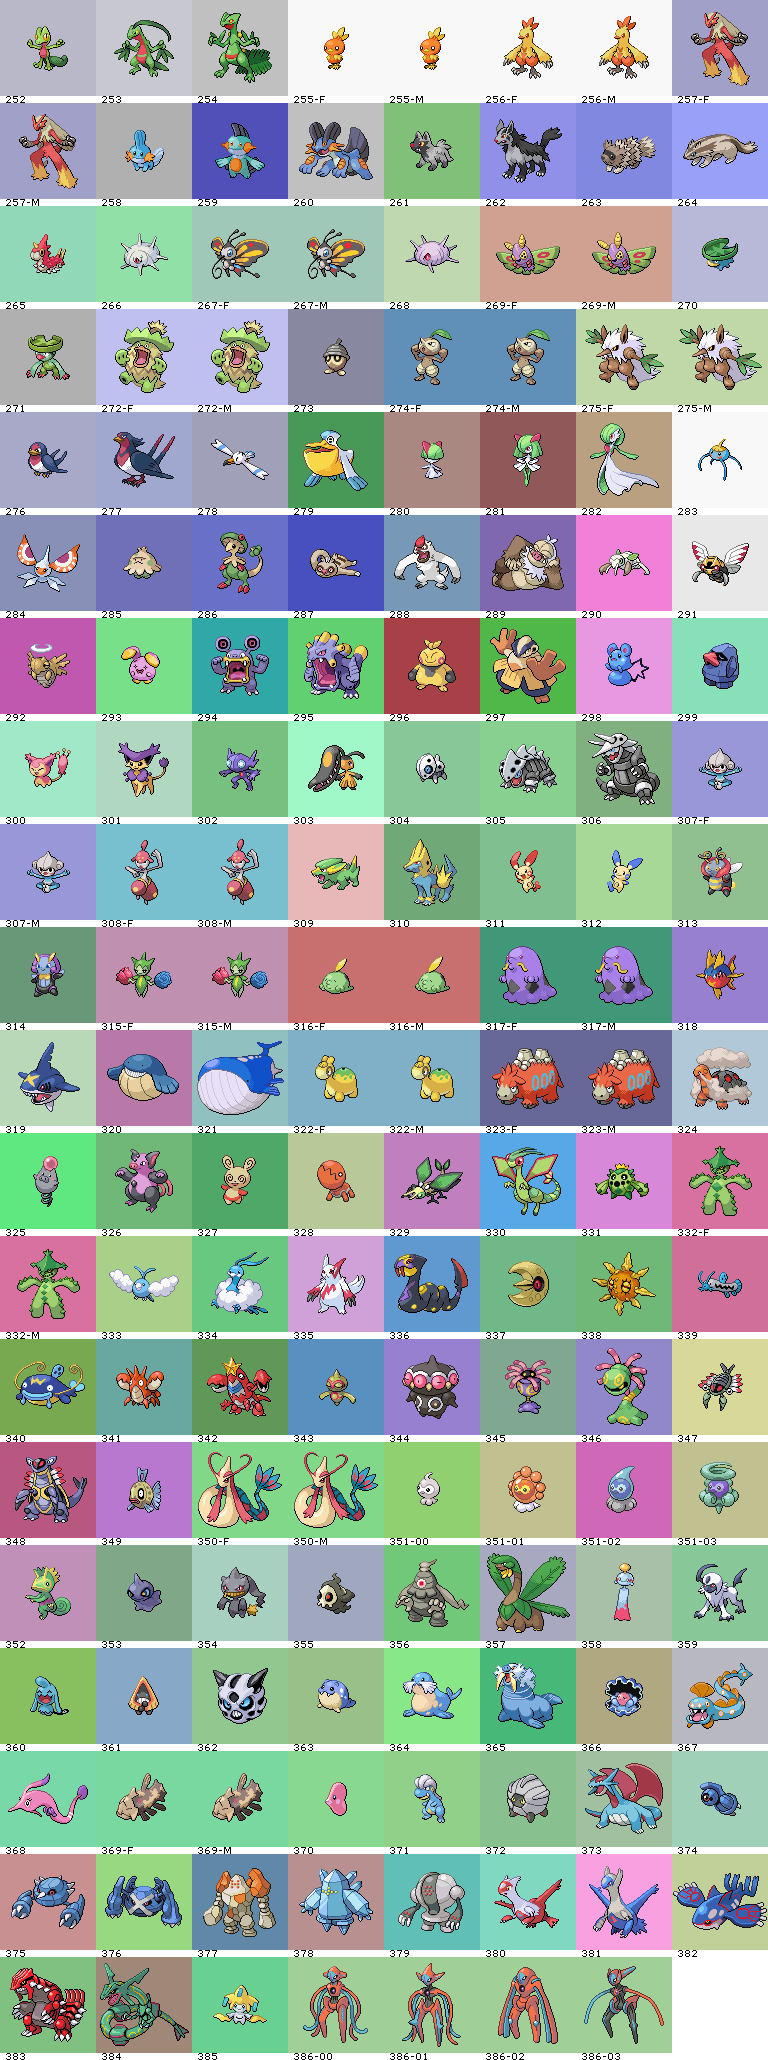 Pokémon (3rd Generation, Front)